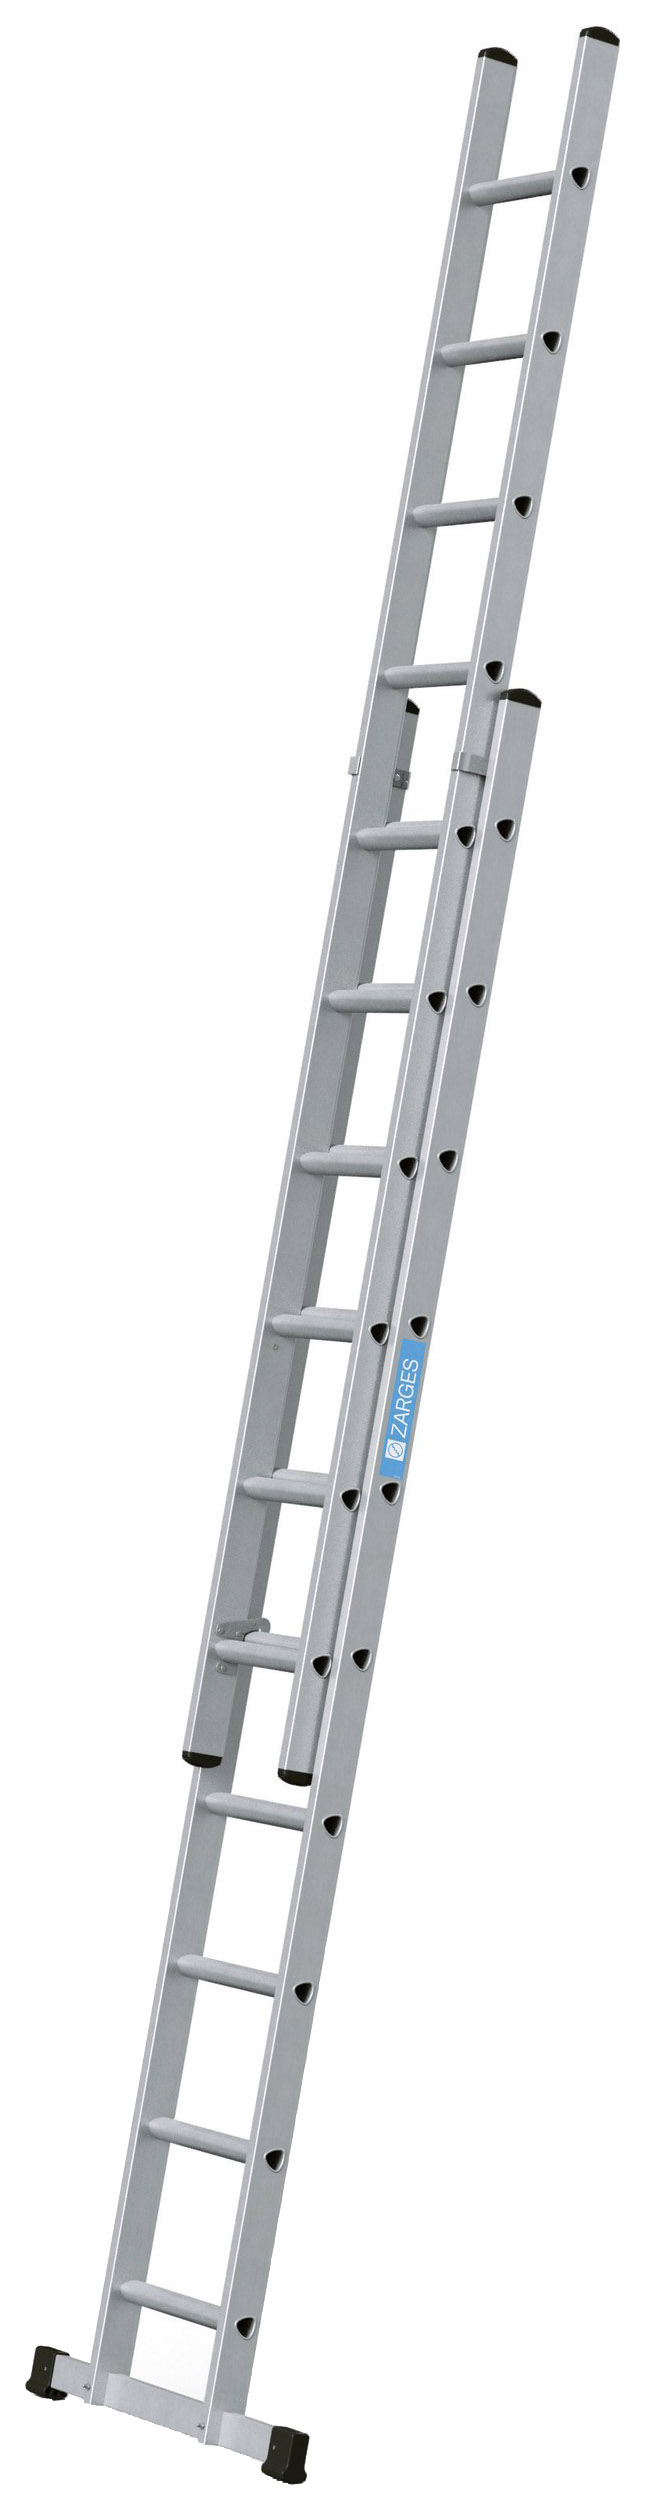 Zarges Everest 2 x 10 D-Rung Aluminium Double Extension Ladder - Max Height 4.93m